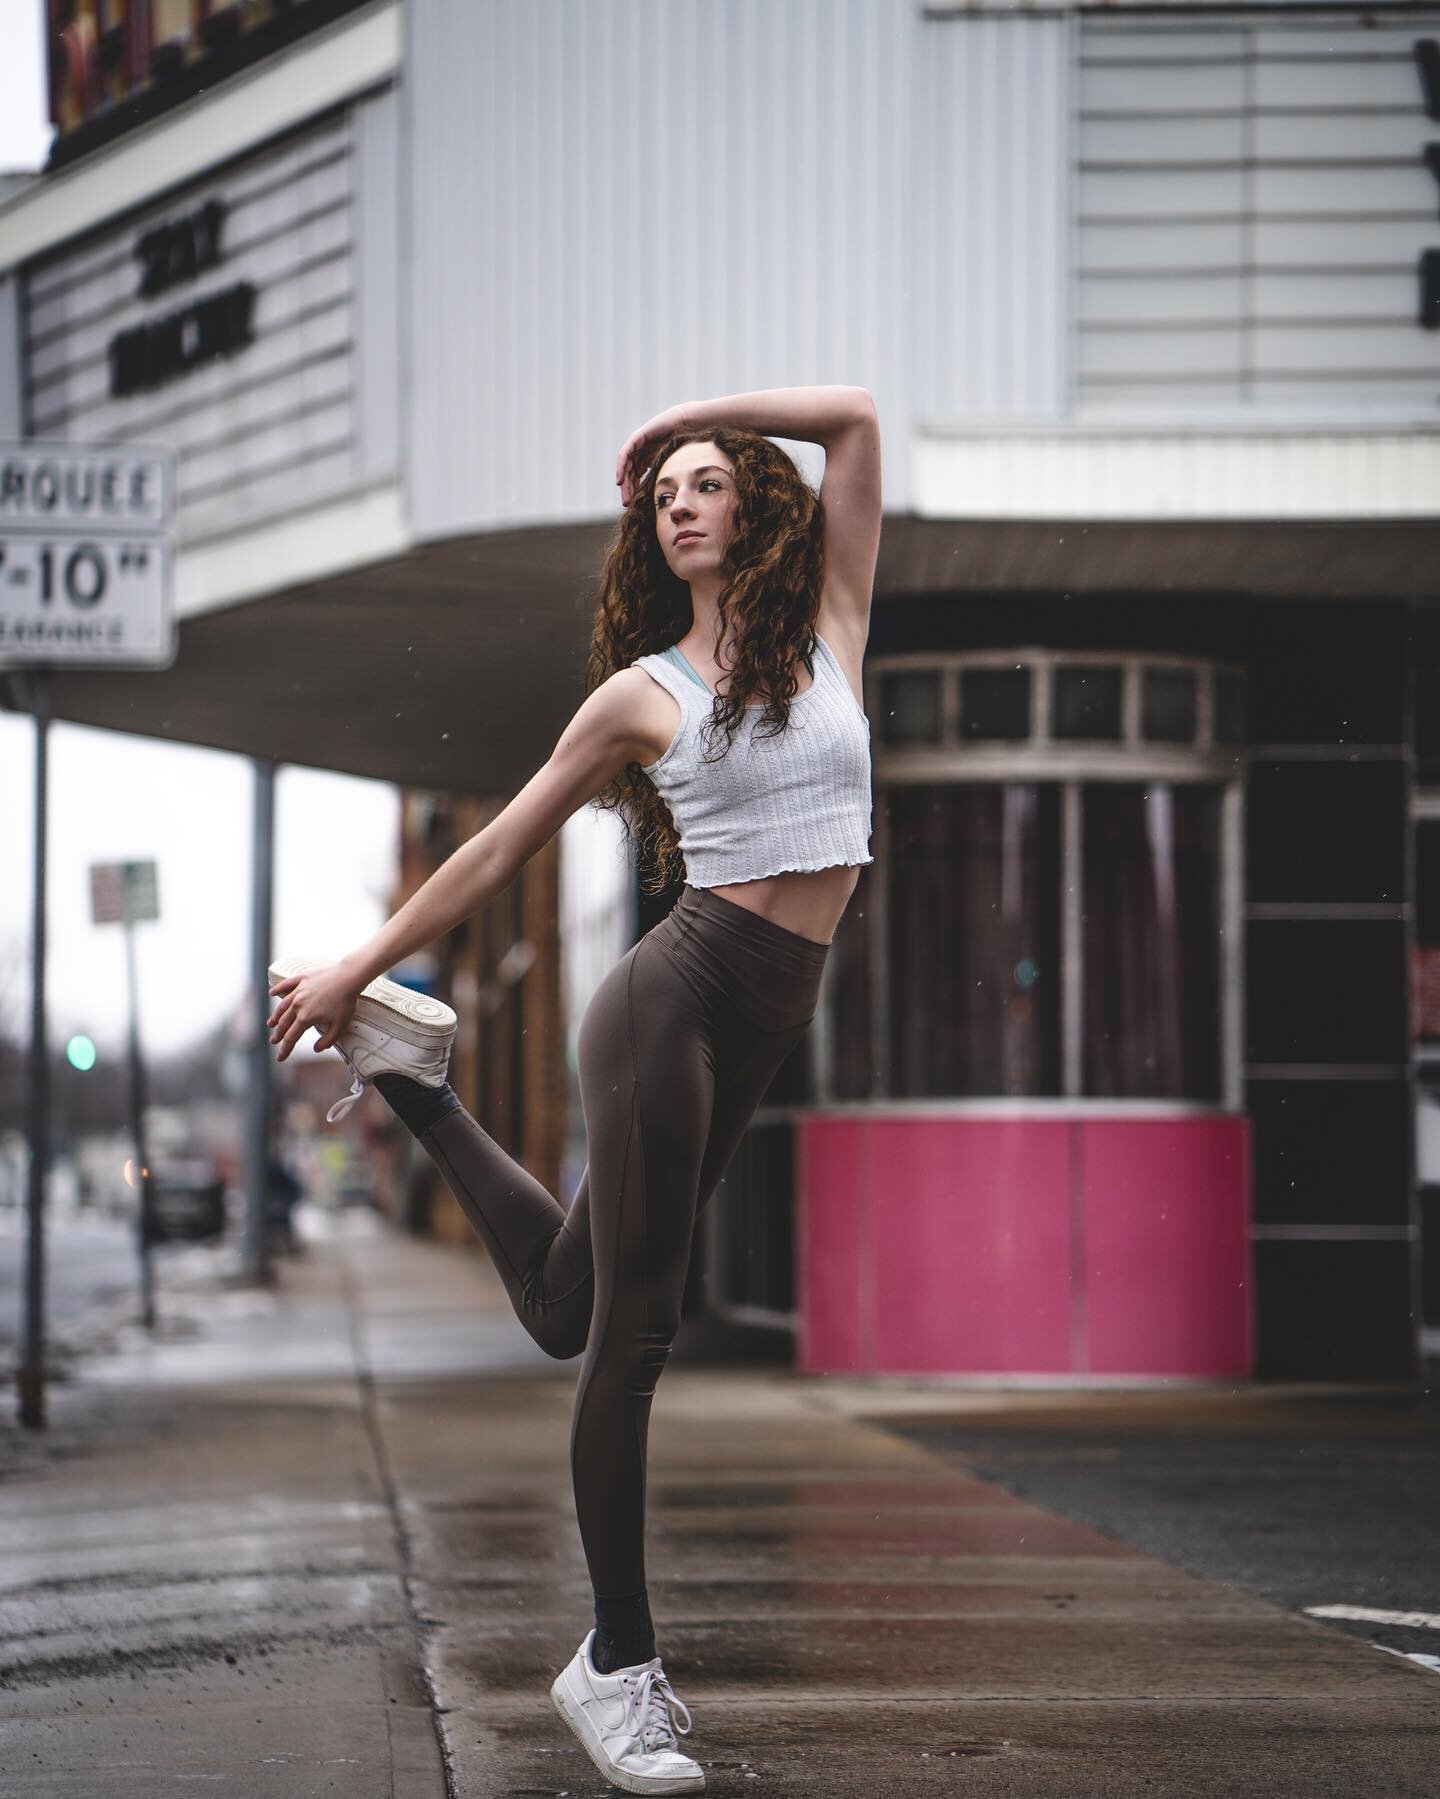 Dancer: @maddy_masello 

#LKFilms #WomenWhoFilm
#Oneida #NewYork #Dance #Dancer